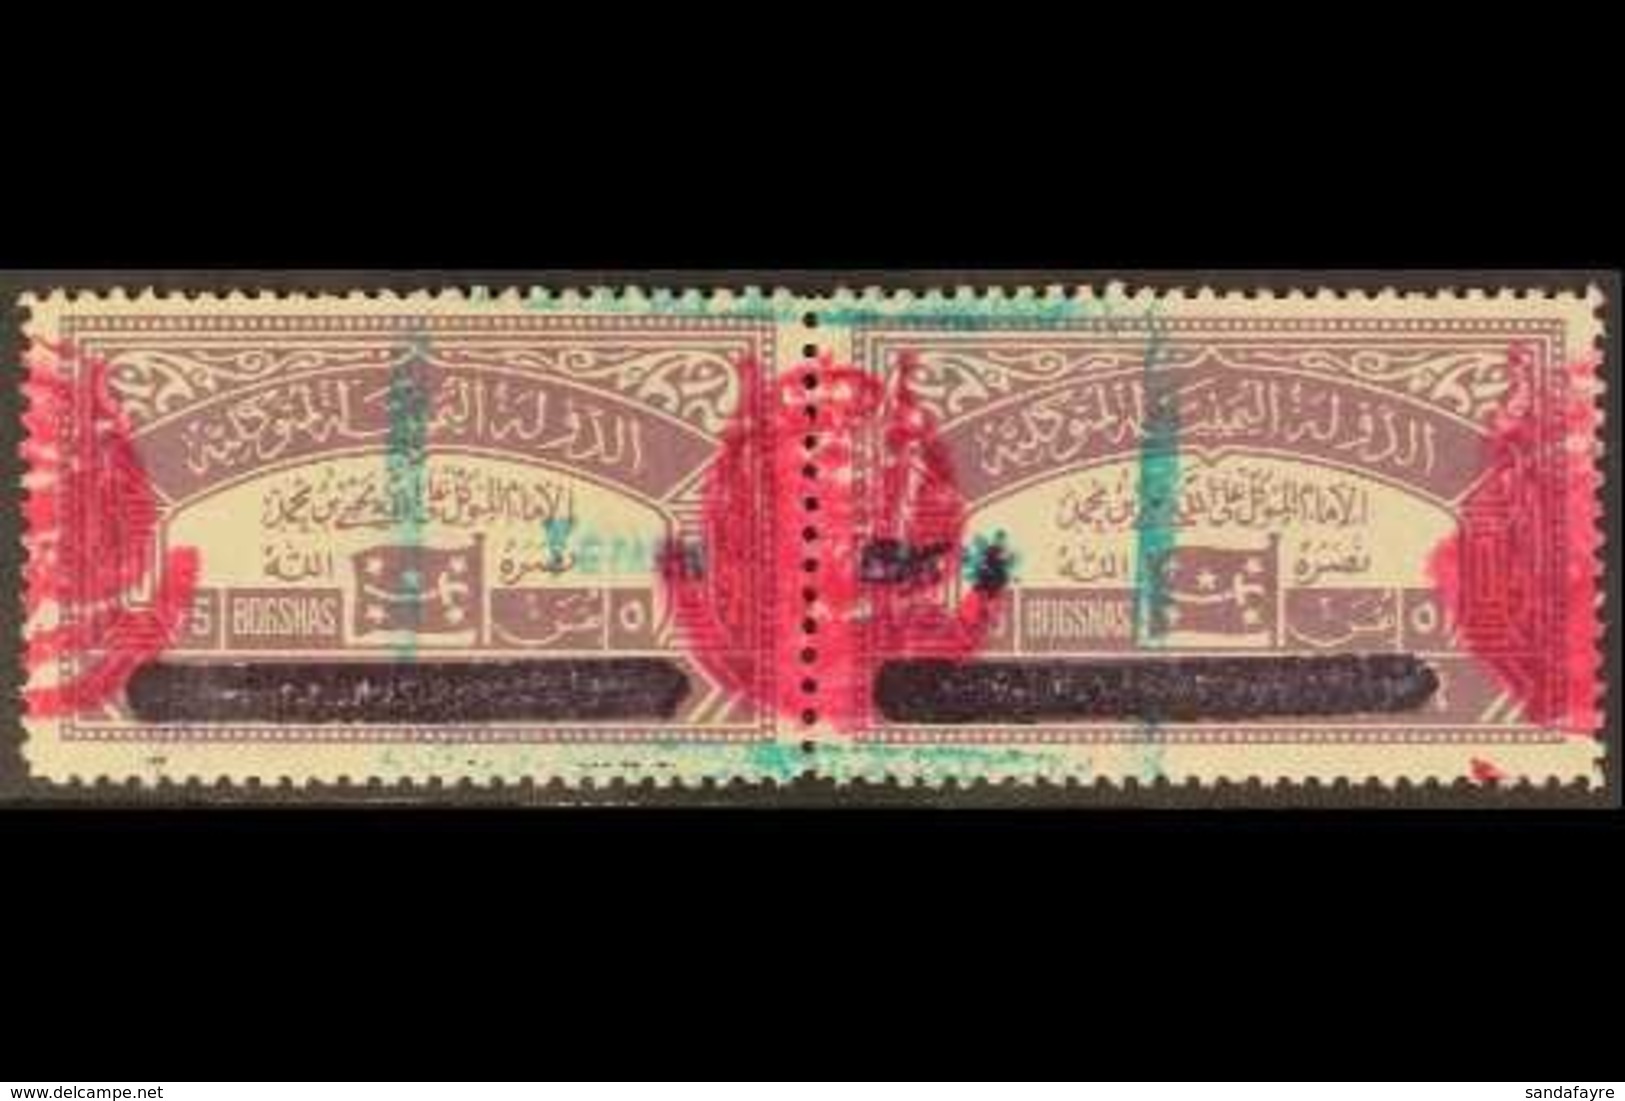 ROYALIST CIVIL WAR ISSUES 1964 10b (5b + 5b) Dull Purple Consular Fee Stamp Overprinted, Horizontal Pair Issued At Al-Ma - Jemen